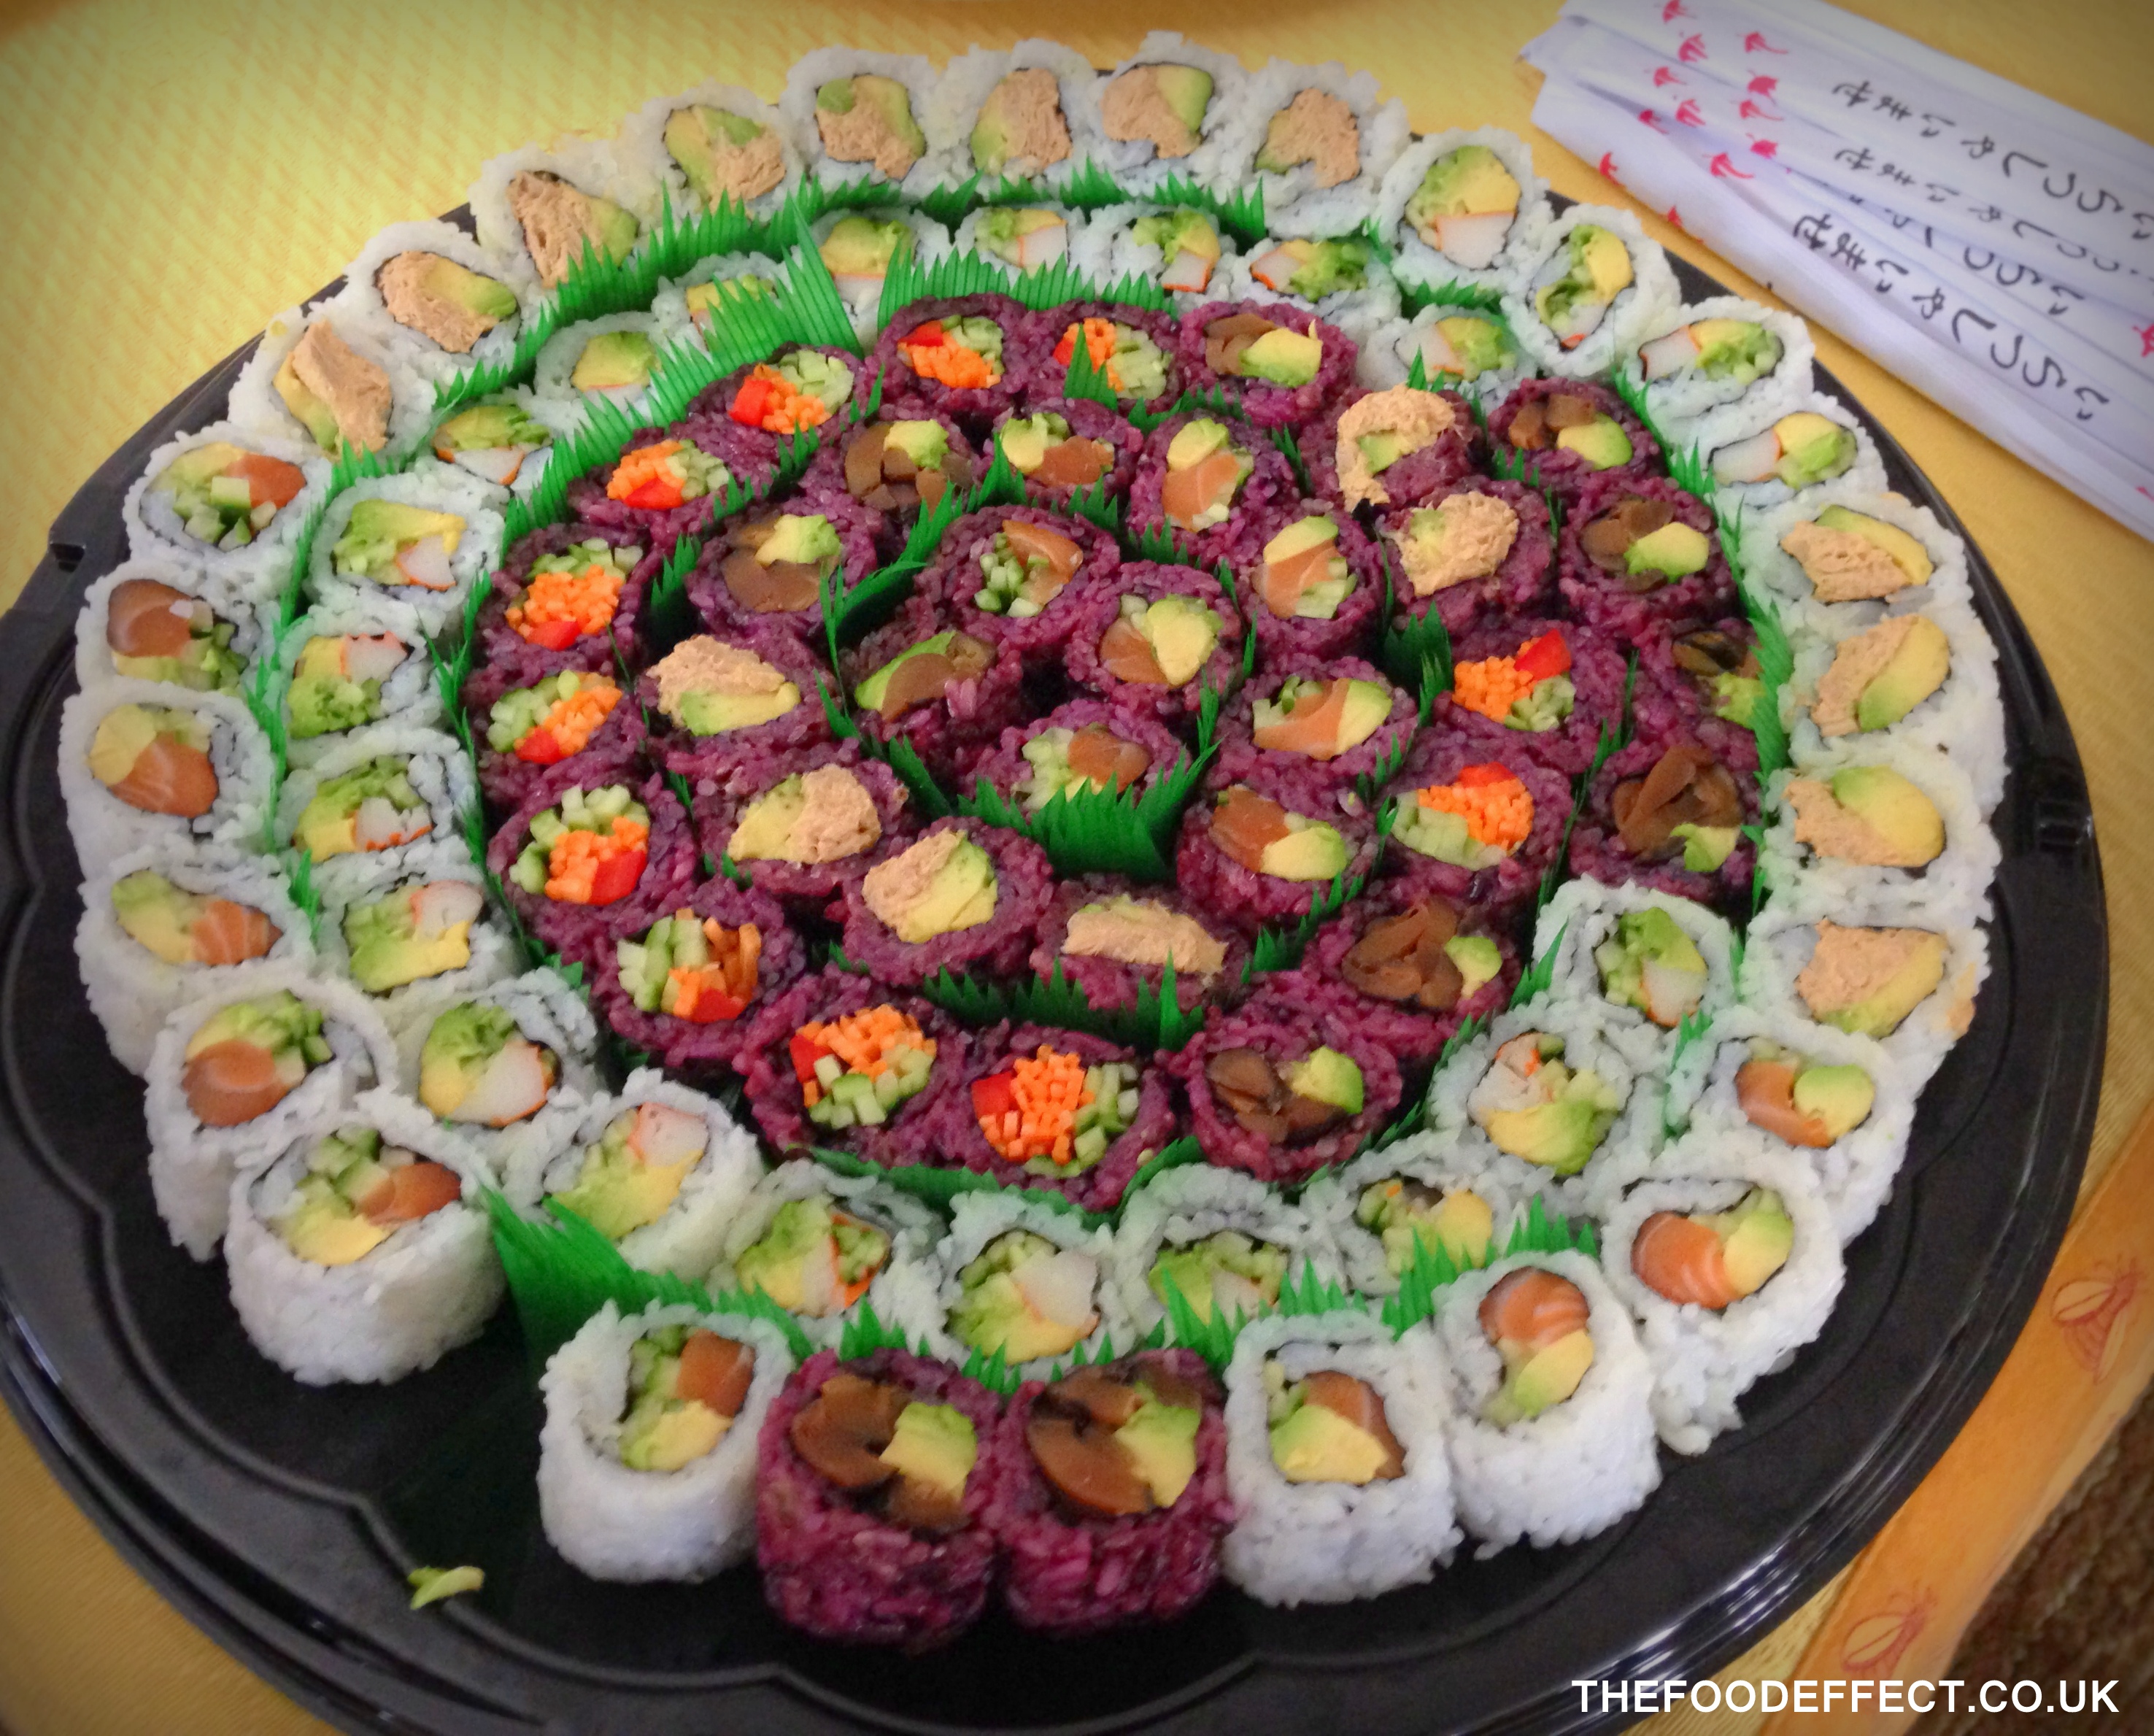 Perfectly healthy sushi platter... no "deep fried" or tempura rolls!